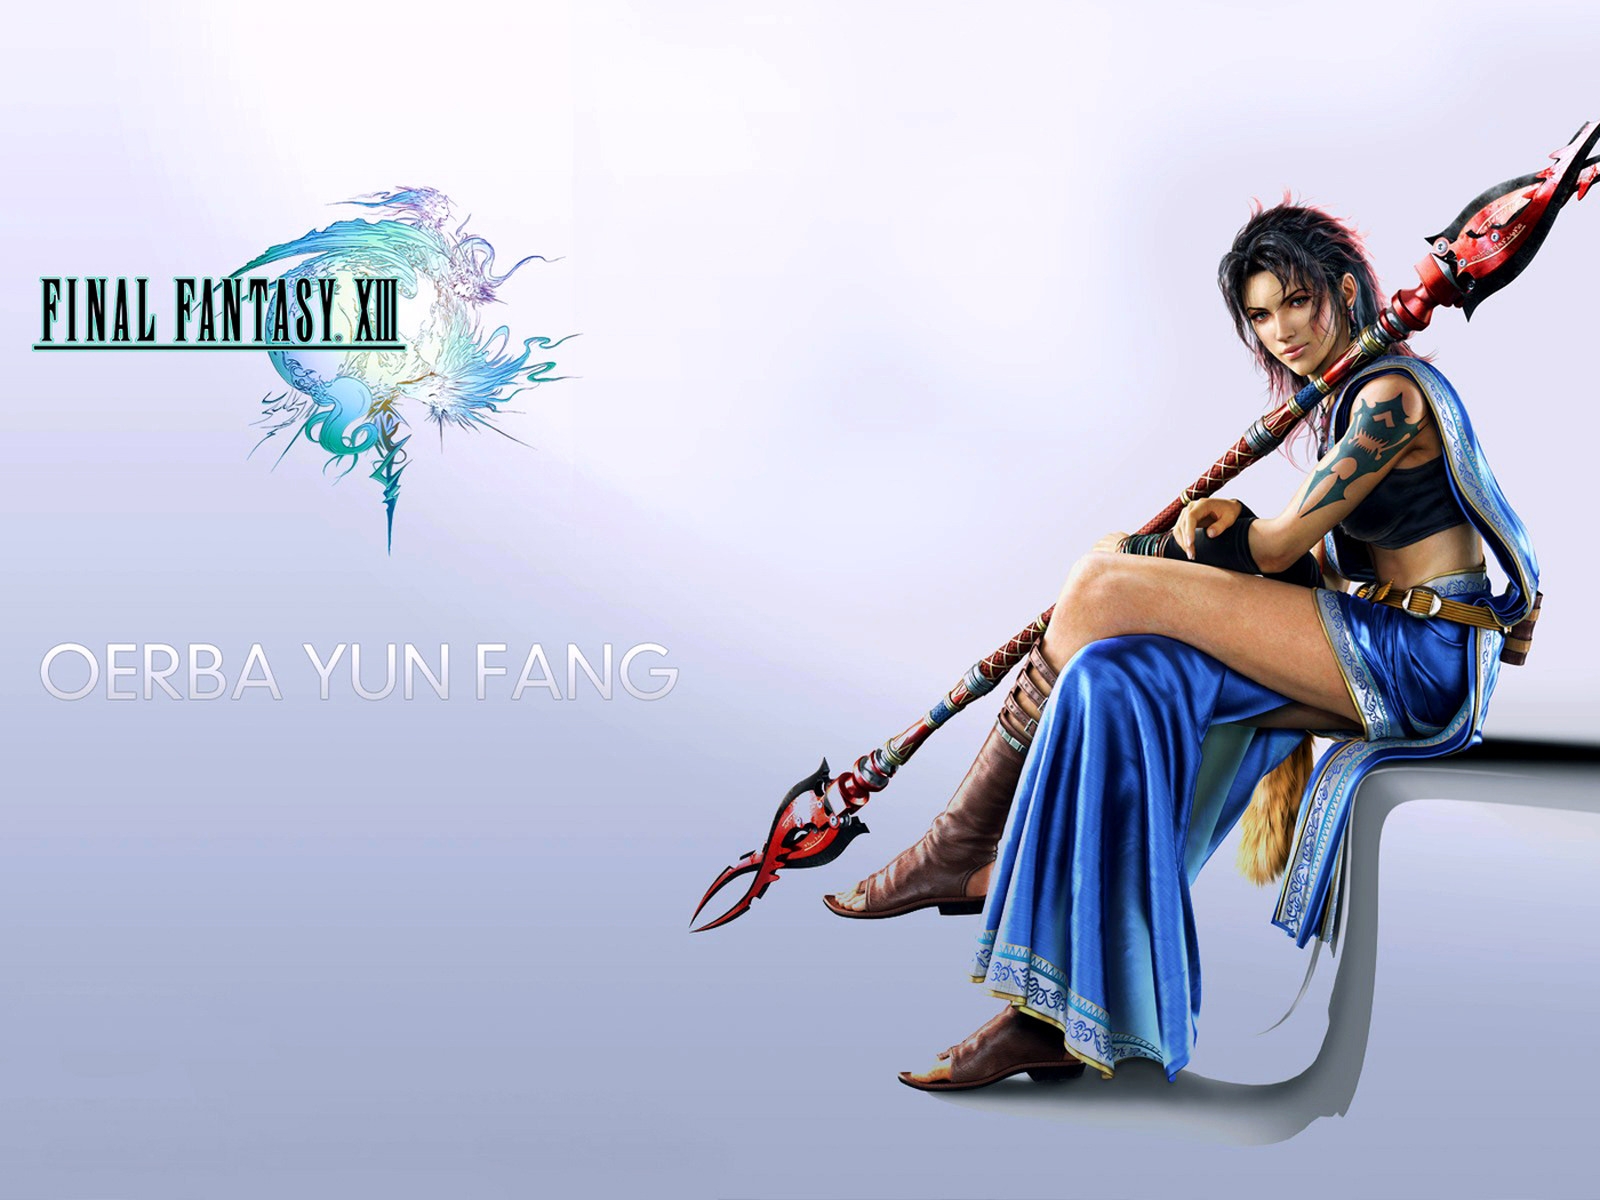 Final Fantasy XIII Oerba Yun Fang for 1600 x 1200 resolution